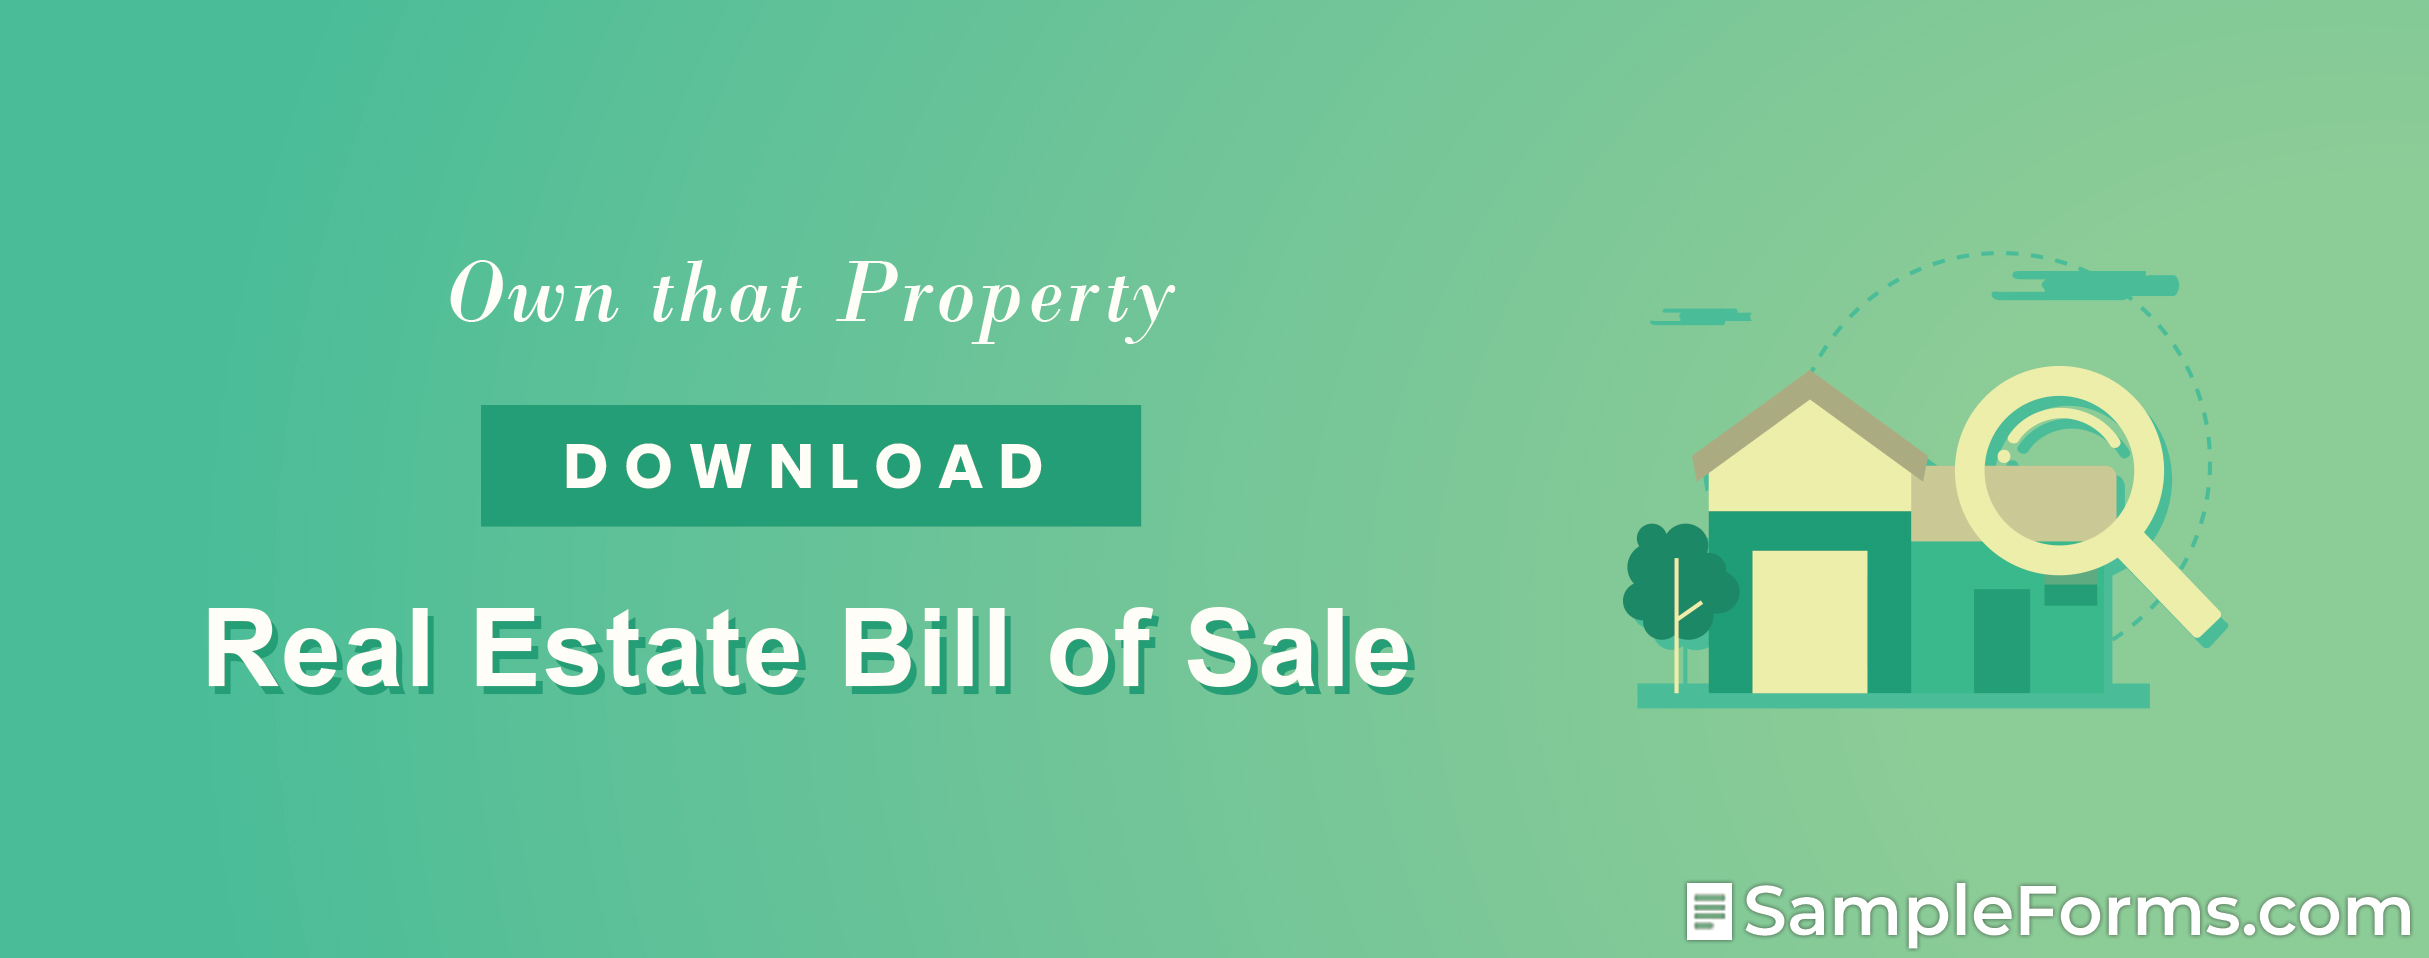 Real Estate Bill of Sale2